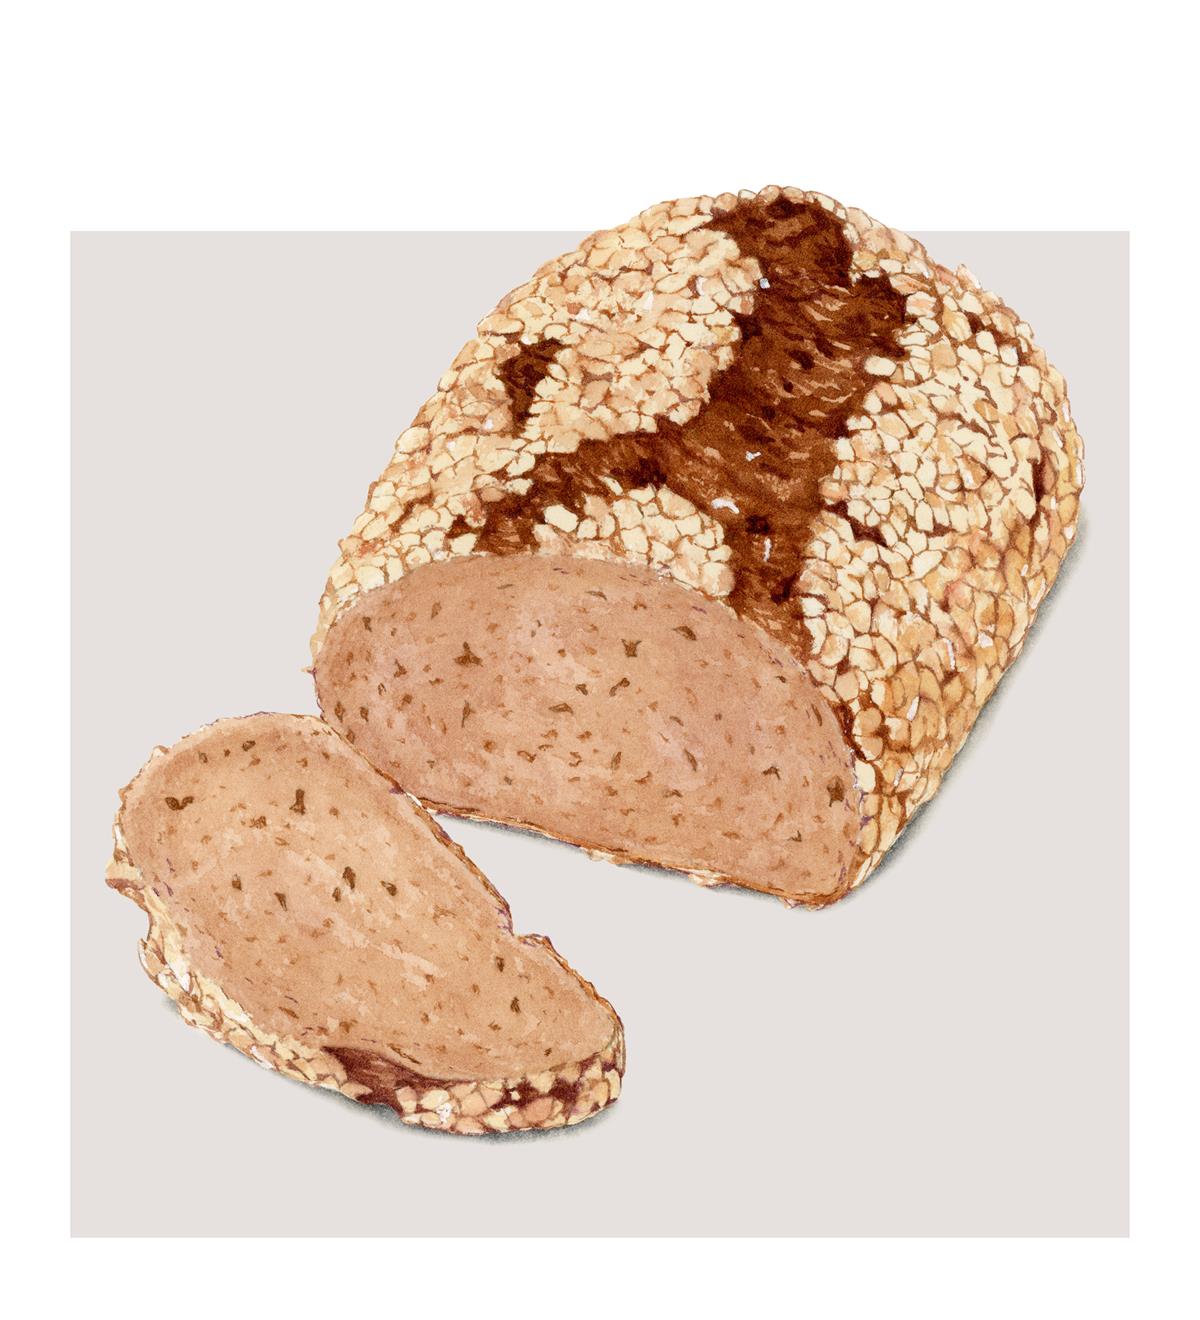 Joseph Brot, glutenfreies Bio gewürztes Hafer Amaranth Brot: 6,90 Euro